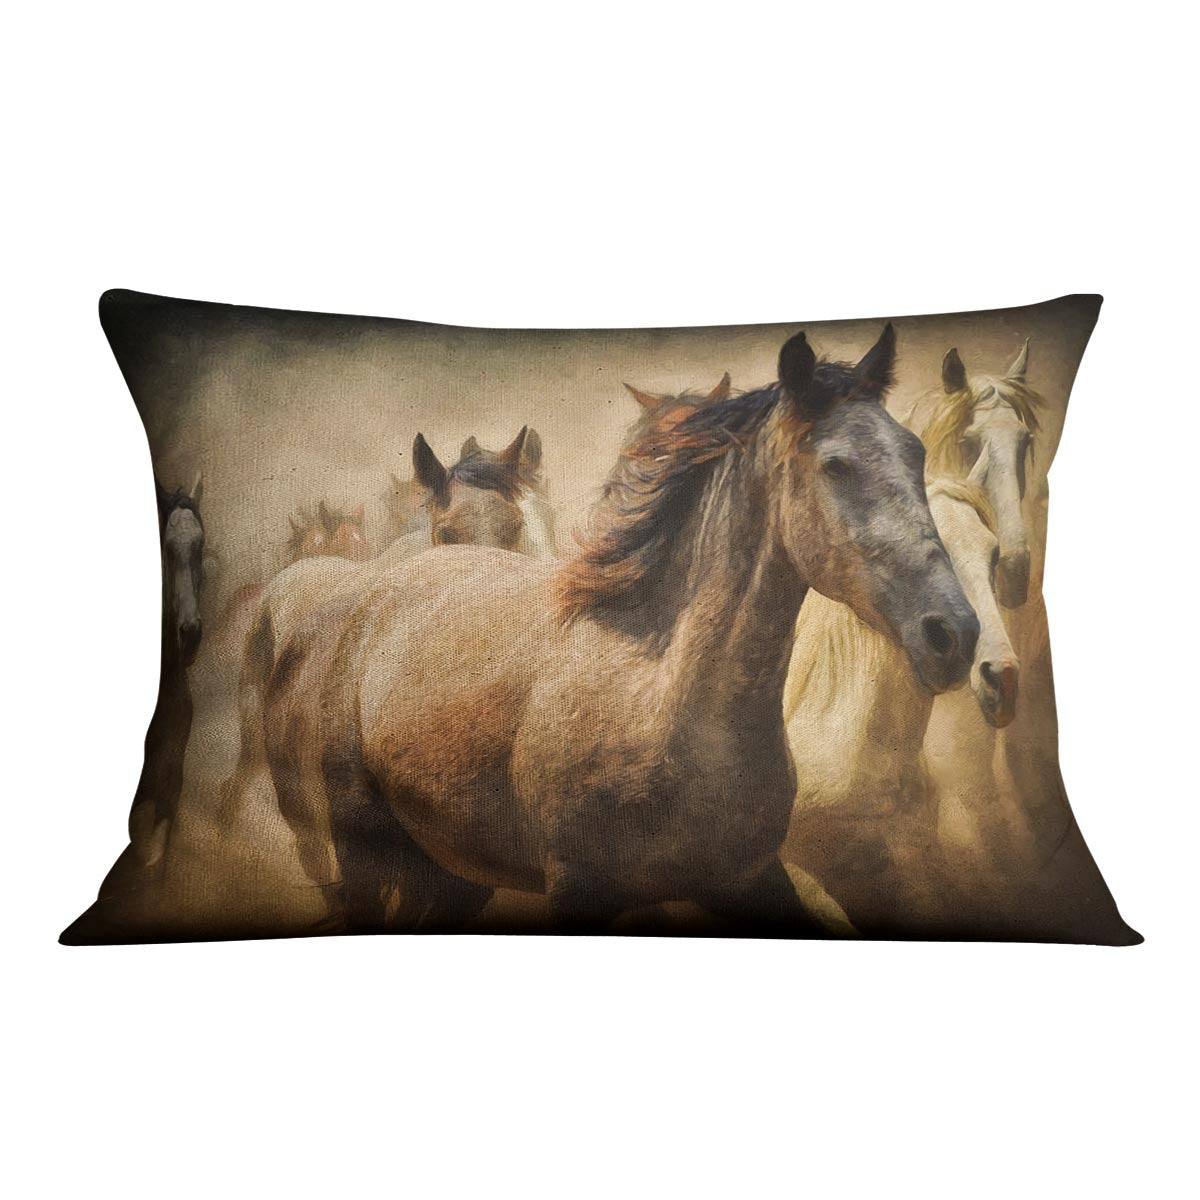 Running Horses Cushion